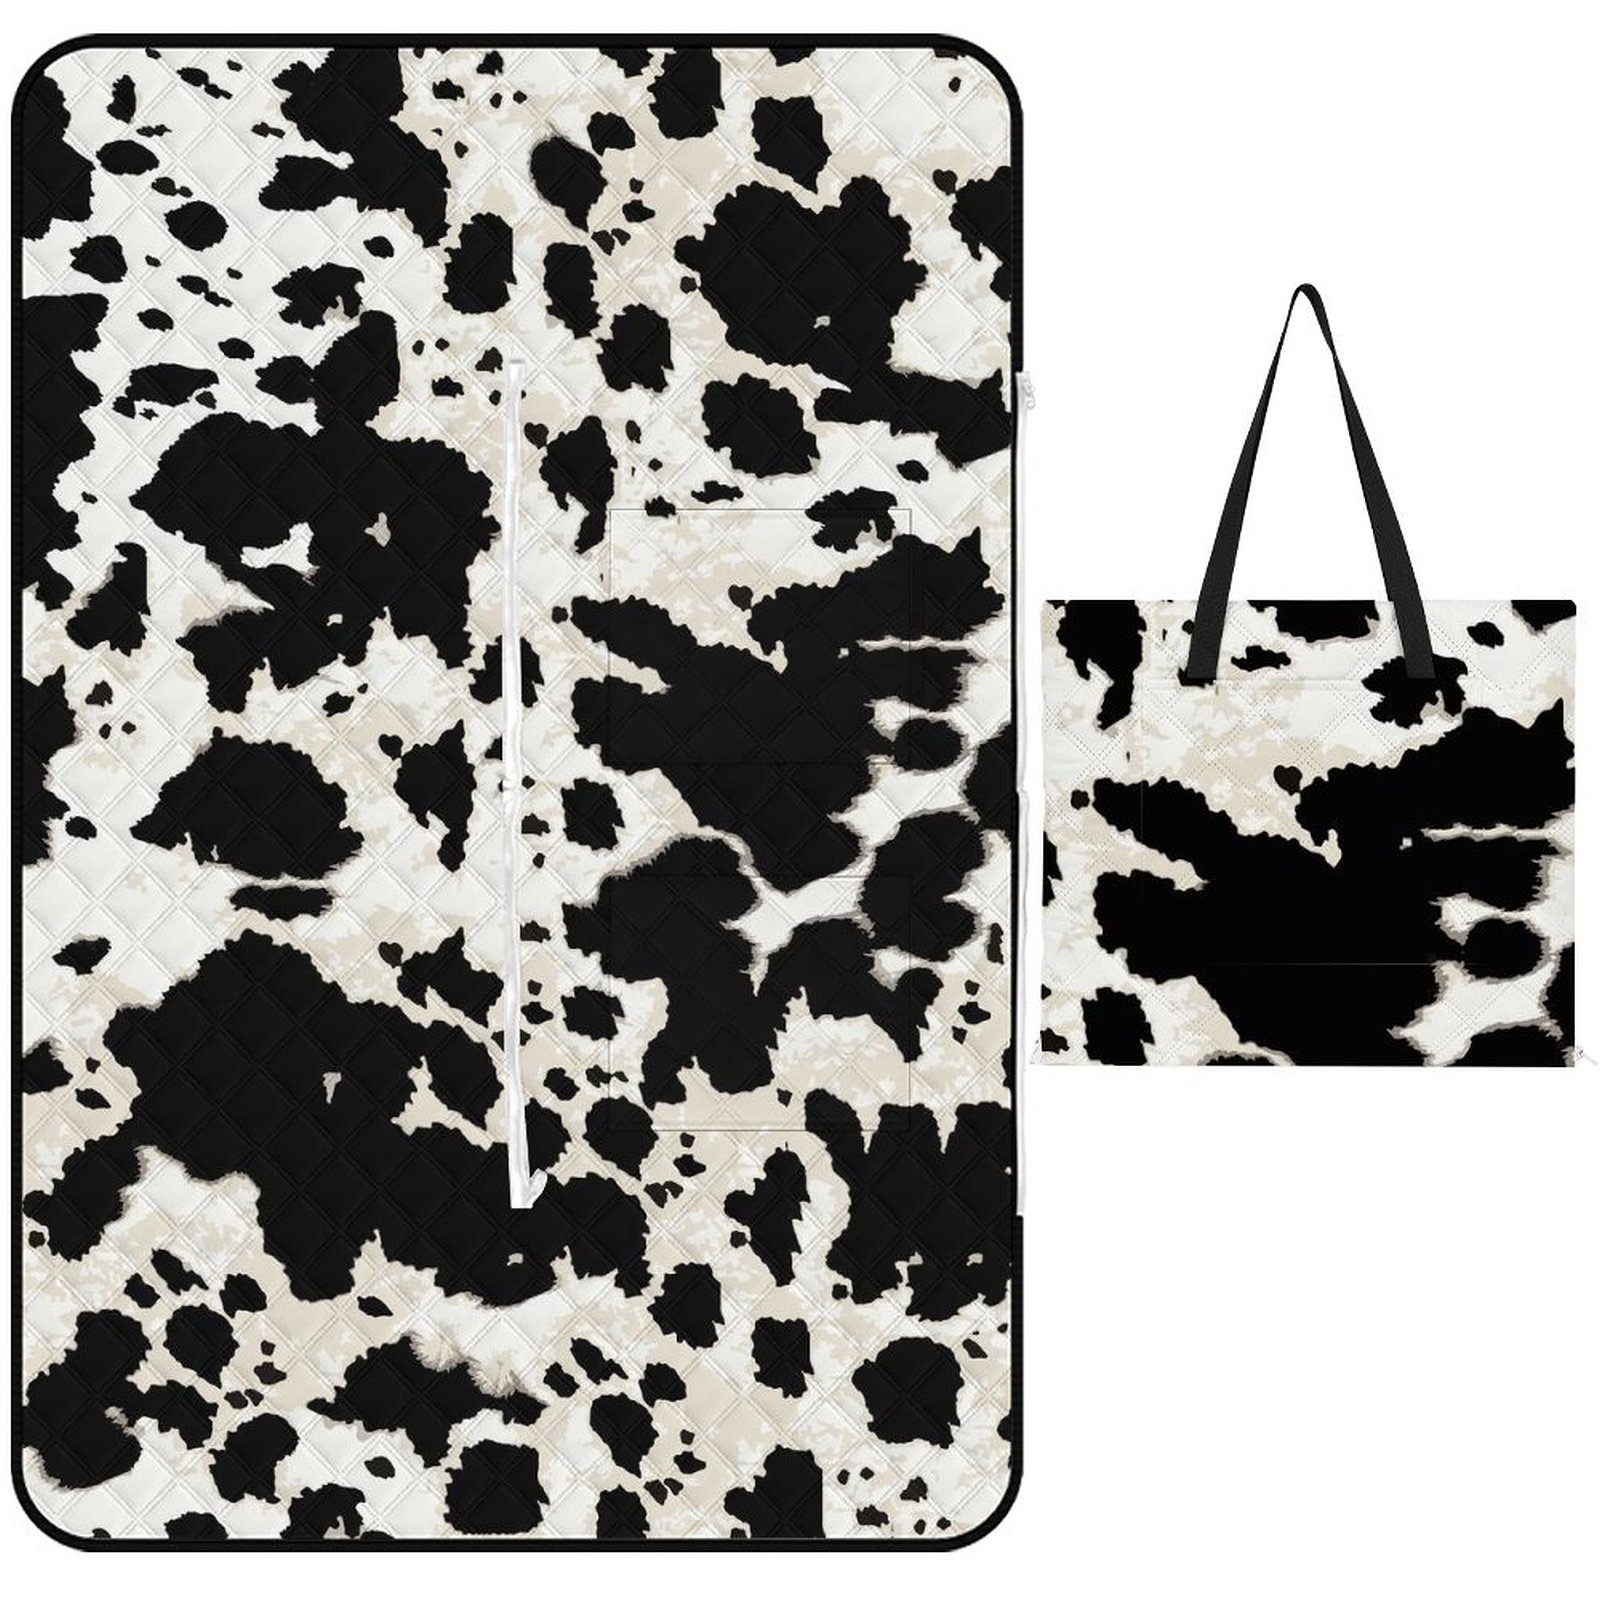 LAKIMCT Irregular Cow Print Picnic Blanket with Zipper, Waterproof ...